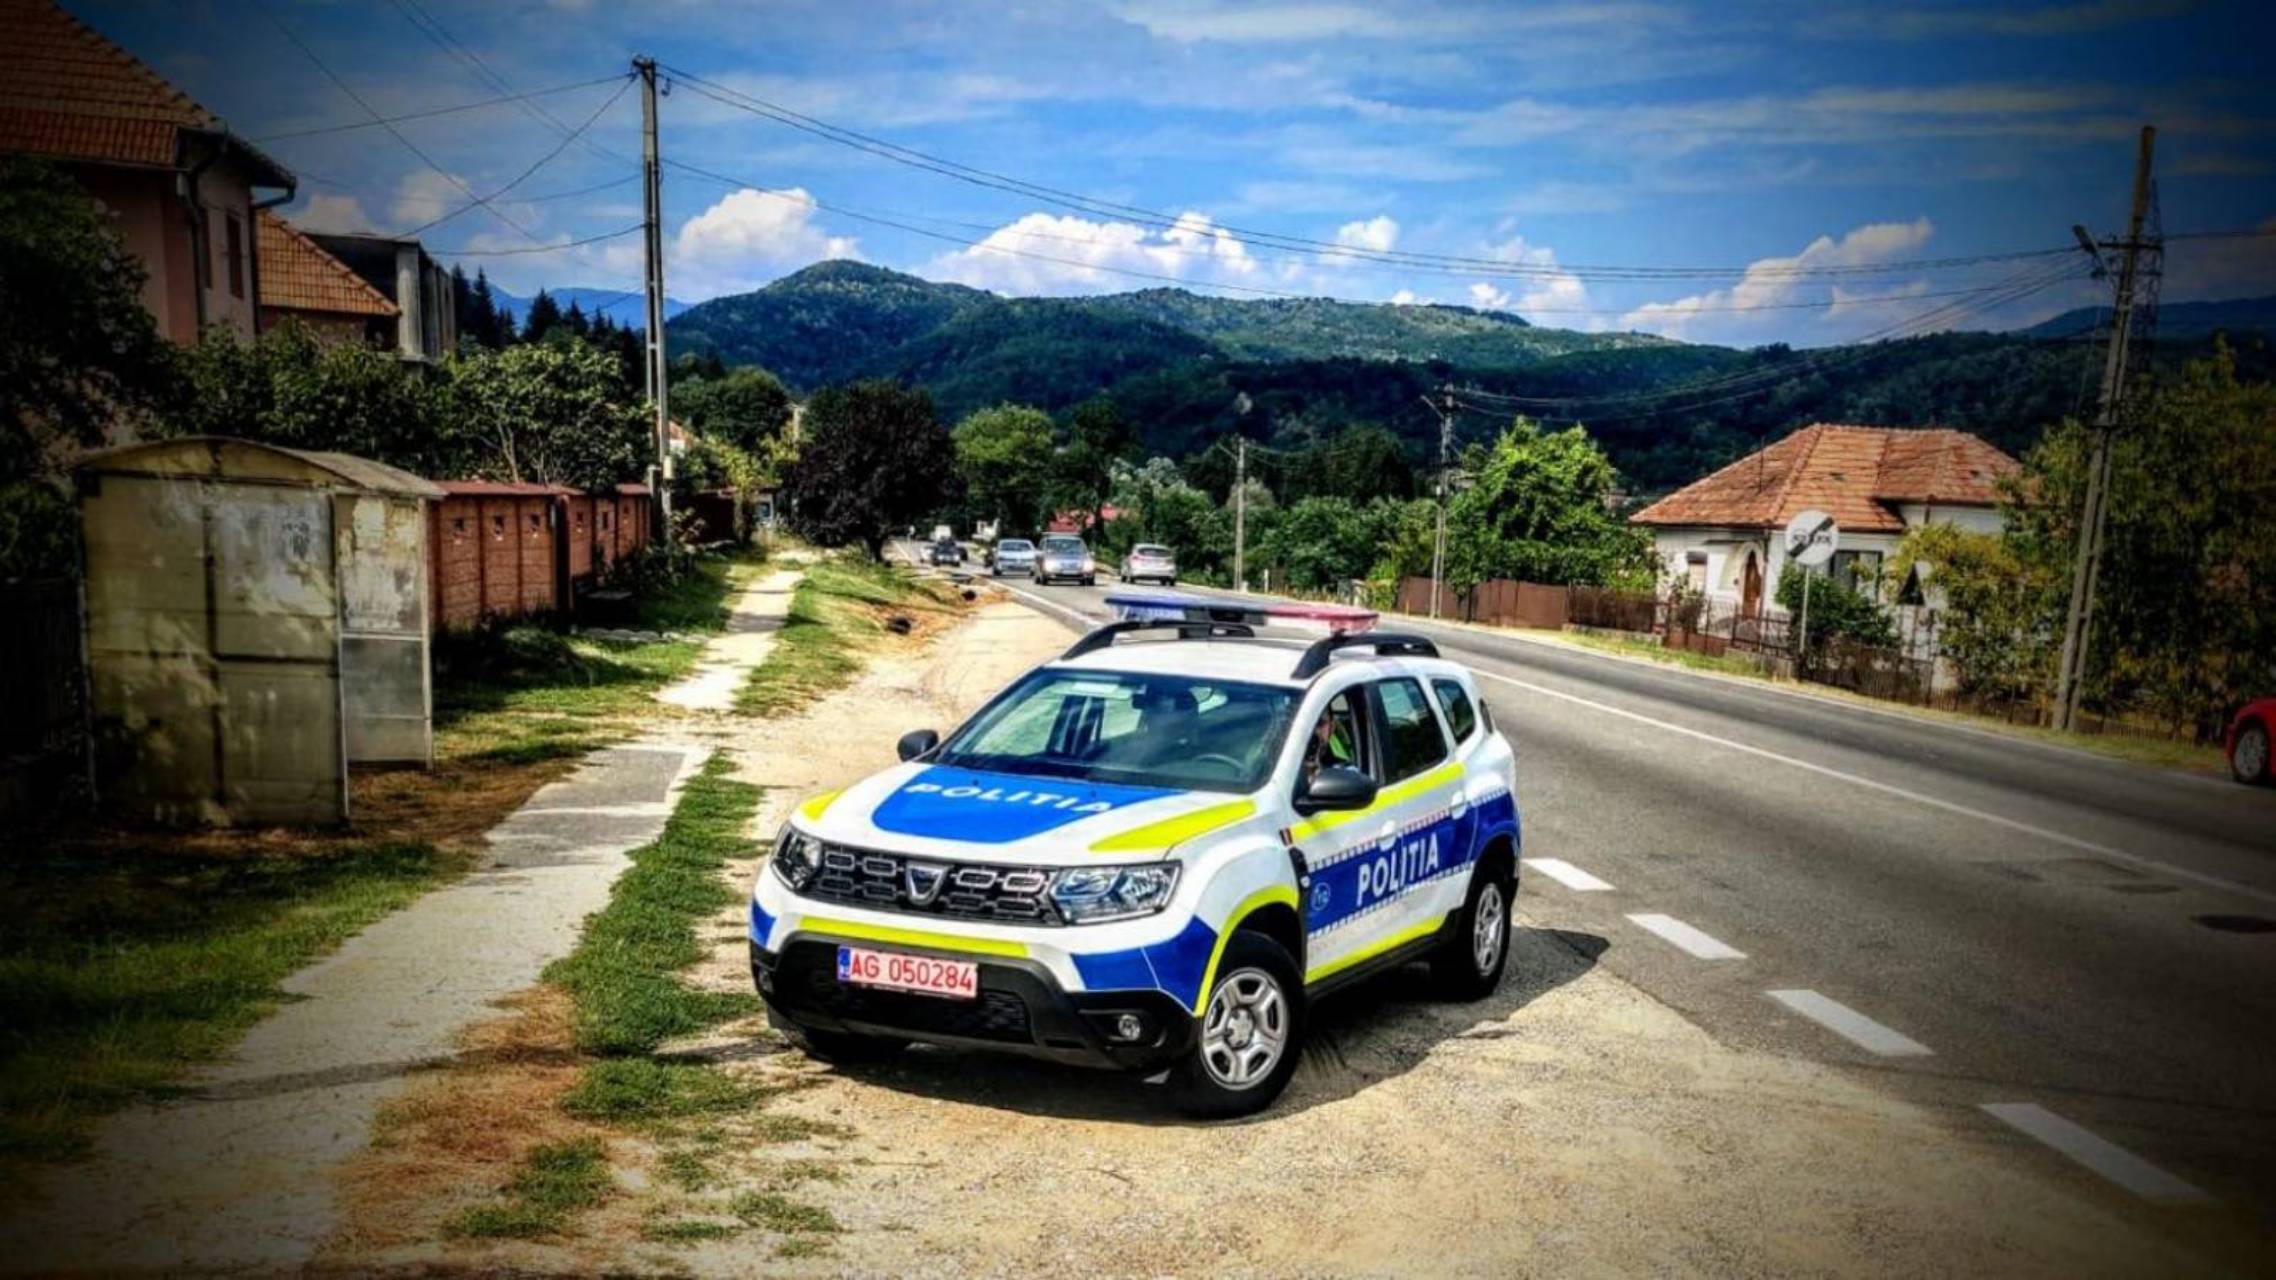 Romanian poliisi amnesia iso kuljettaja